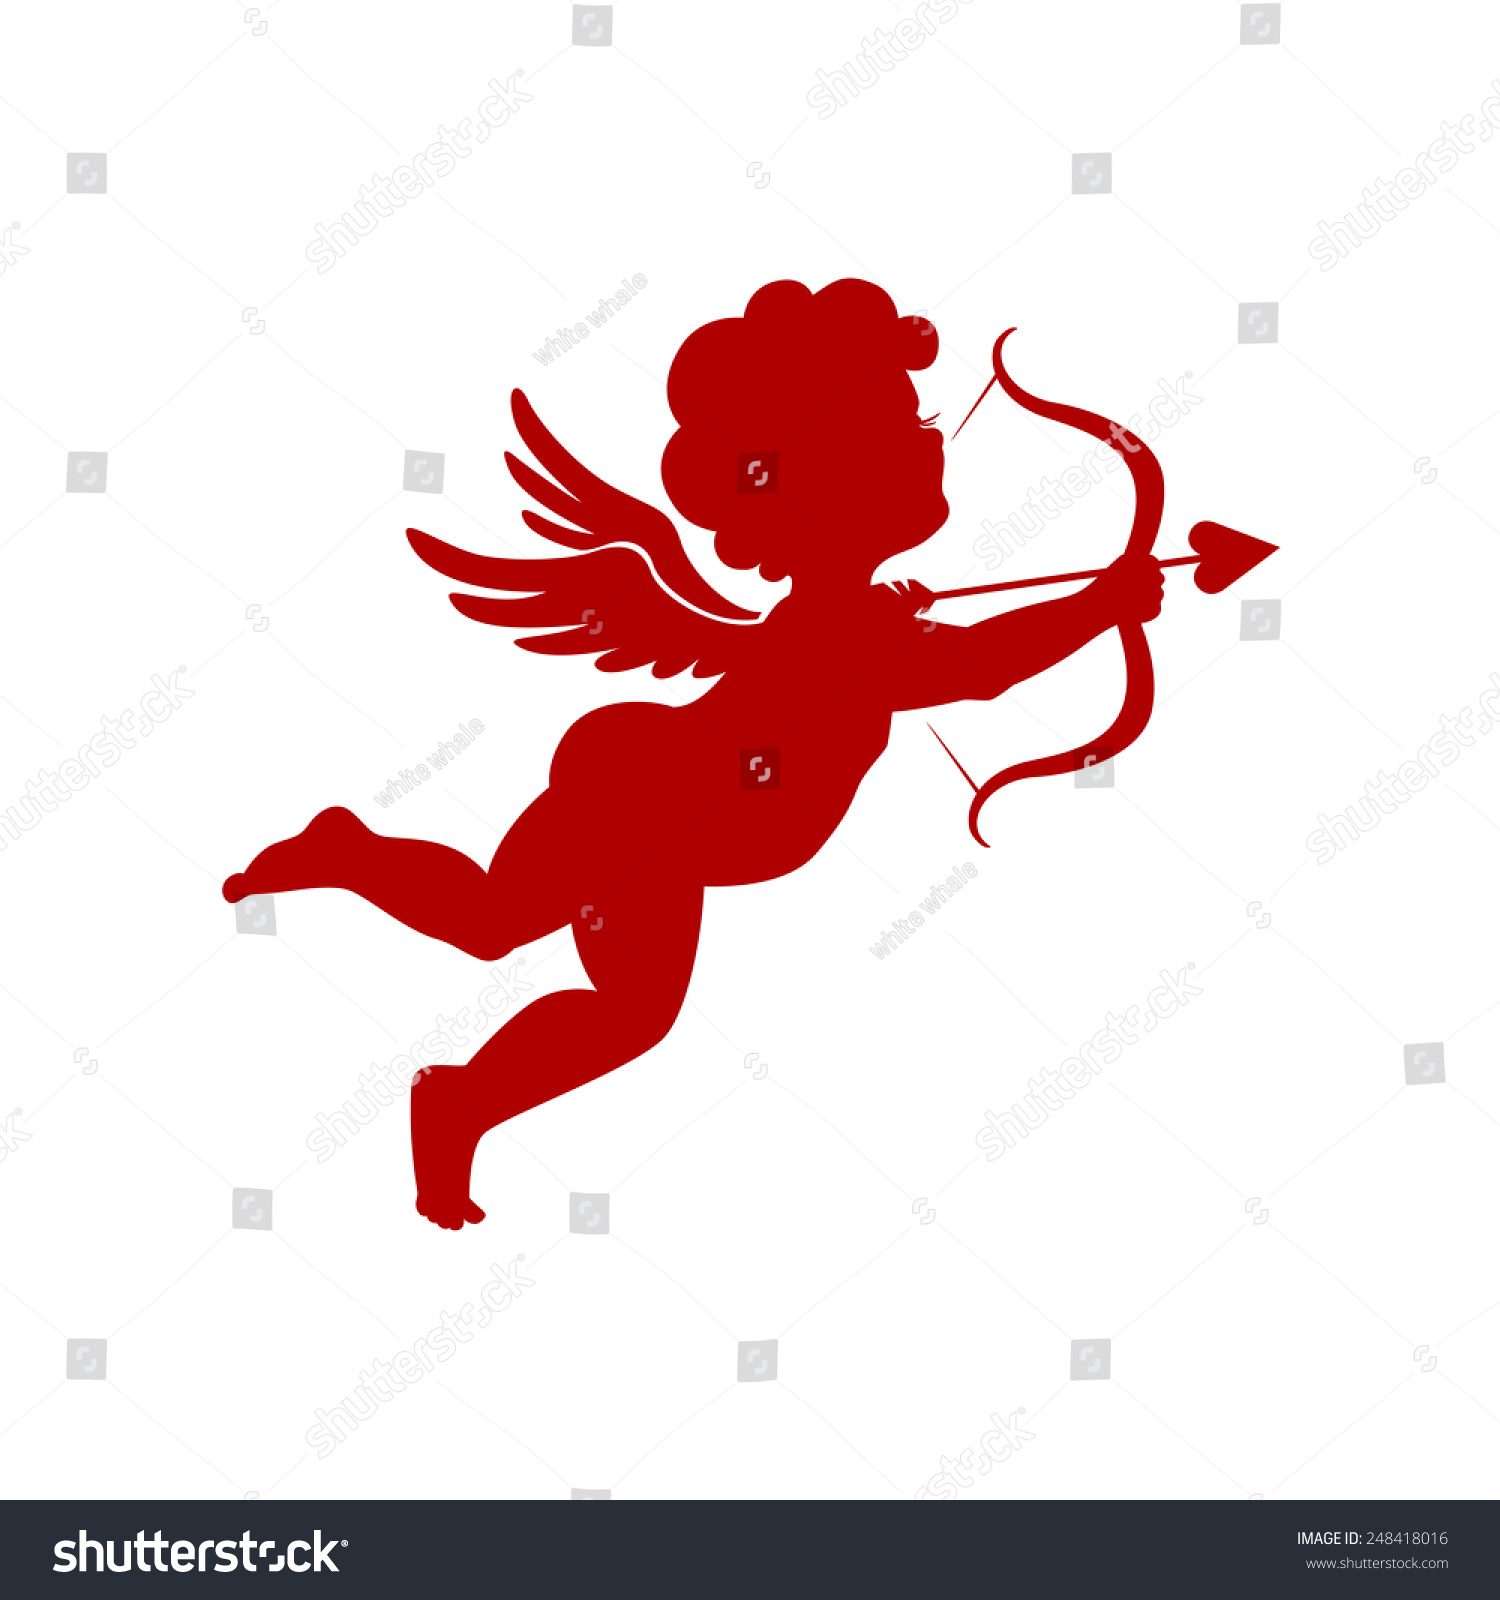 Cupid Silhouette Vector Illustration Stock Vector Royalty Free 248418016 Shutterstock 8180